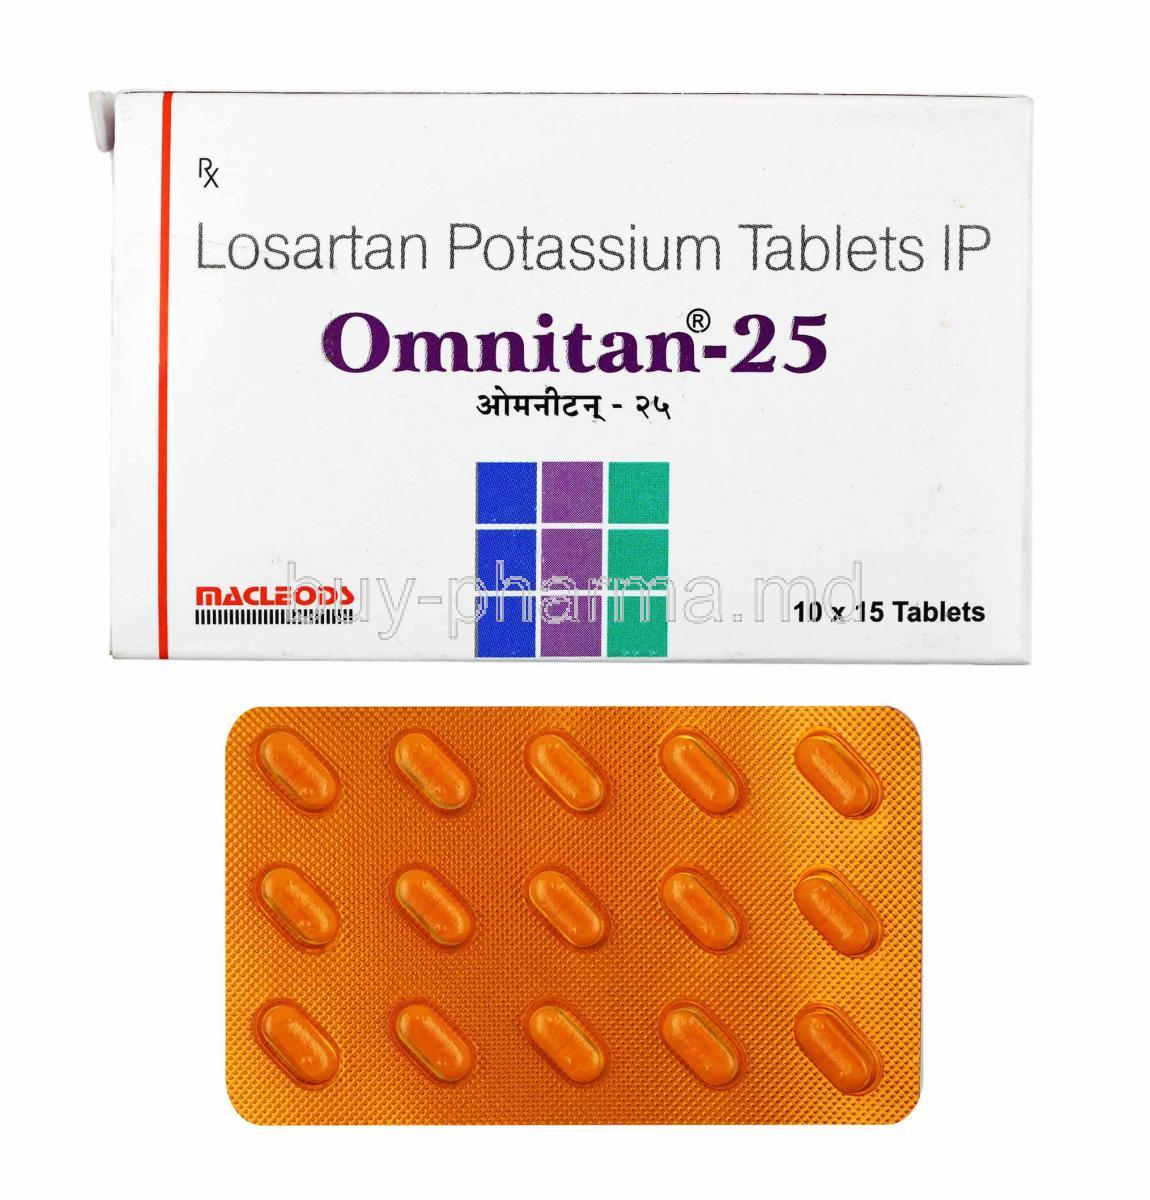 Omnitan, Losartan 25mg box and tablets